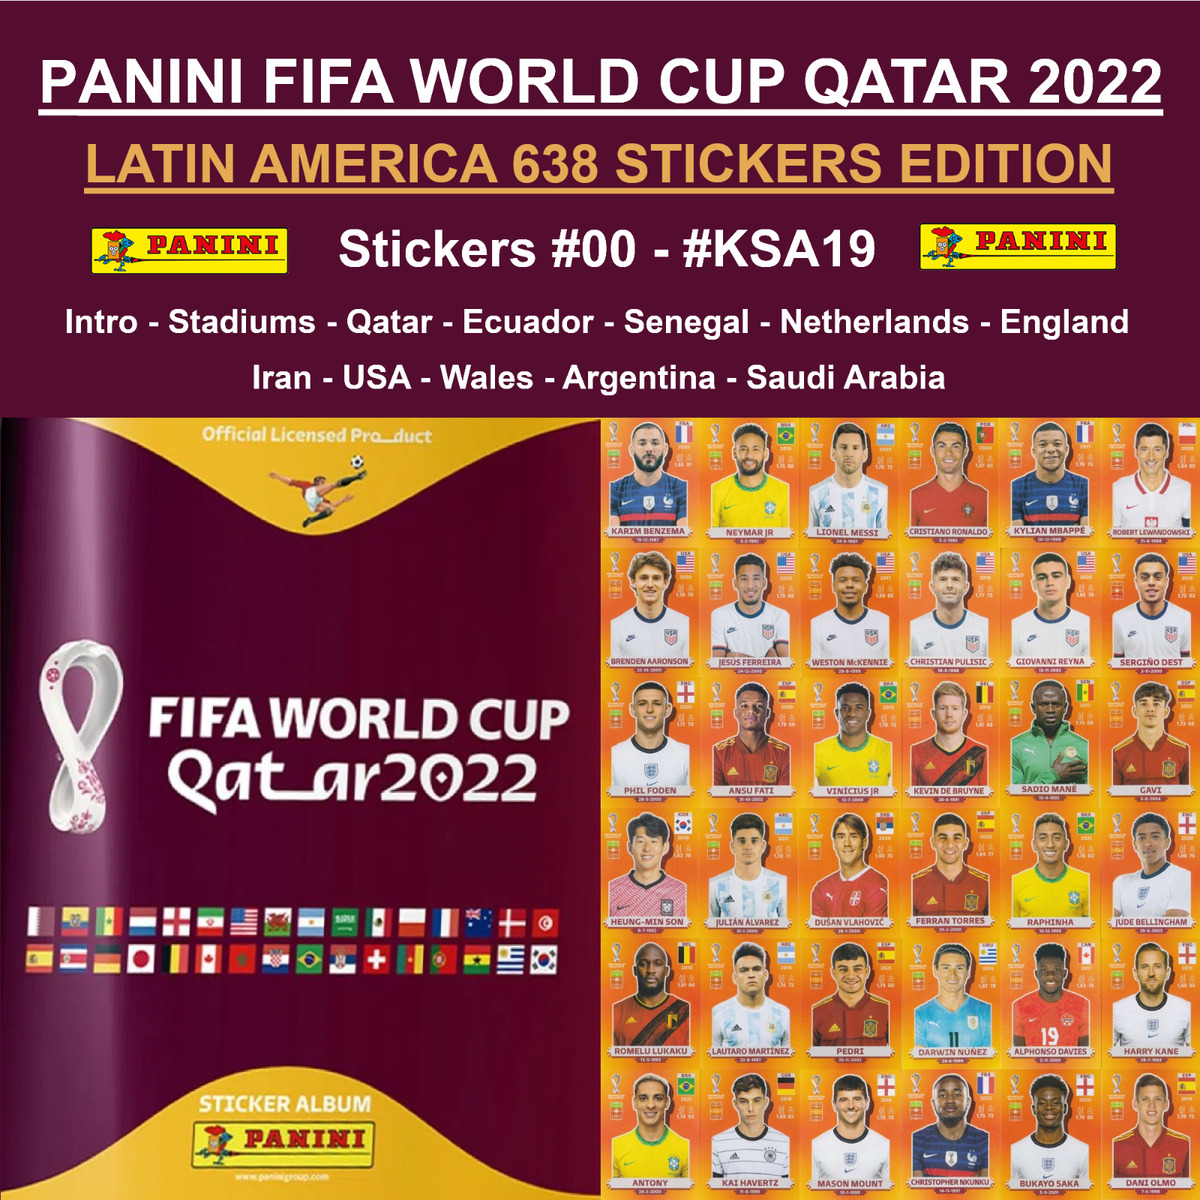 Panini World Cup QATAR 2022 - Latin America Edition - Stickers #00 - #KSA19